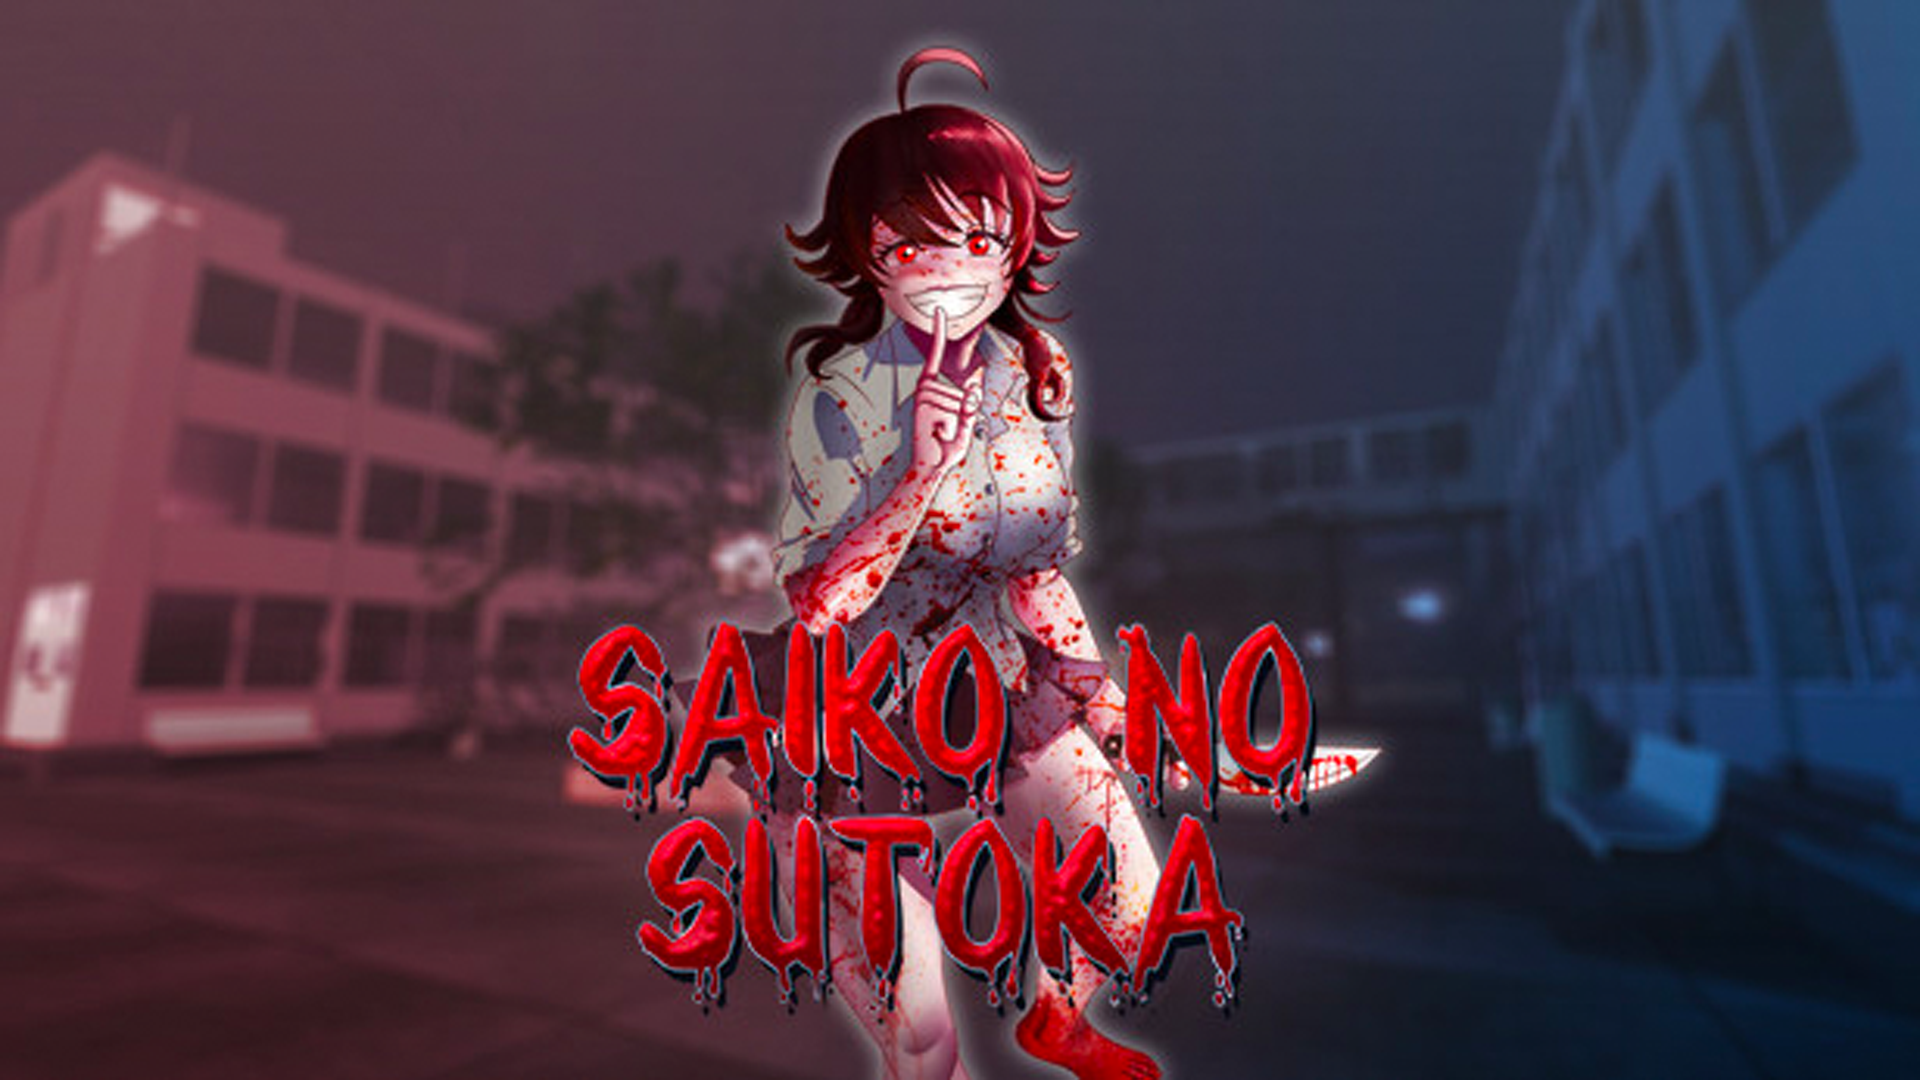 Saiko No Sutoka APK for Android Download